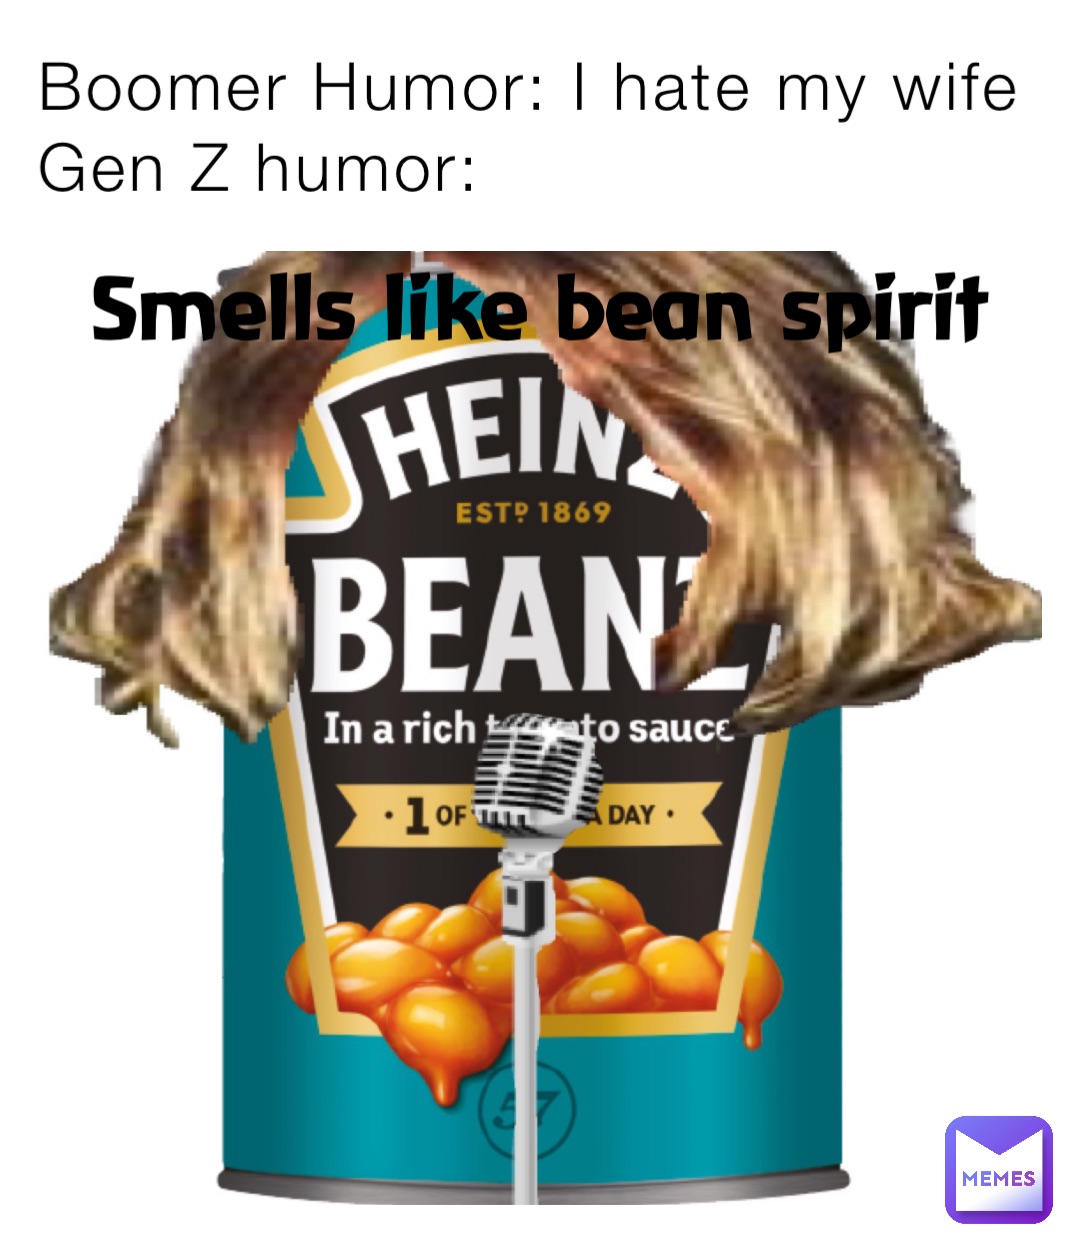 Boomer Humor: I hate my wife 
Gen Z humor: Smells like bean spirit